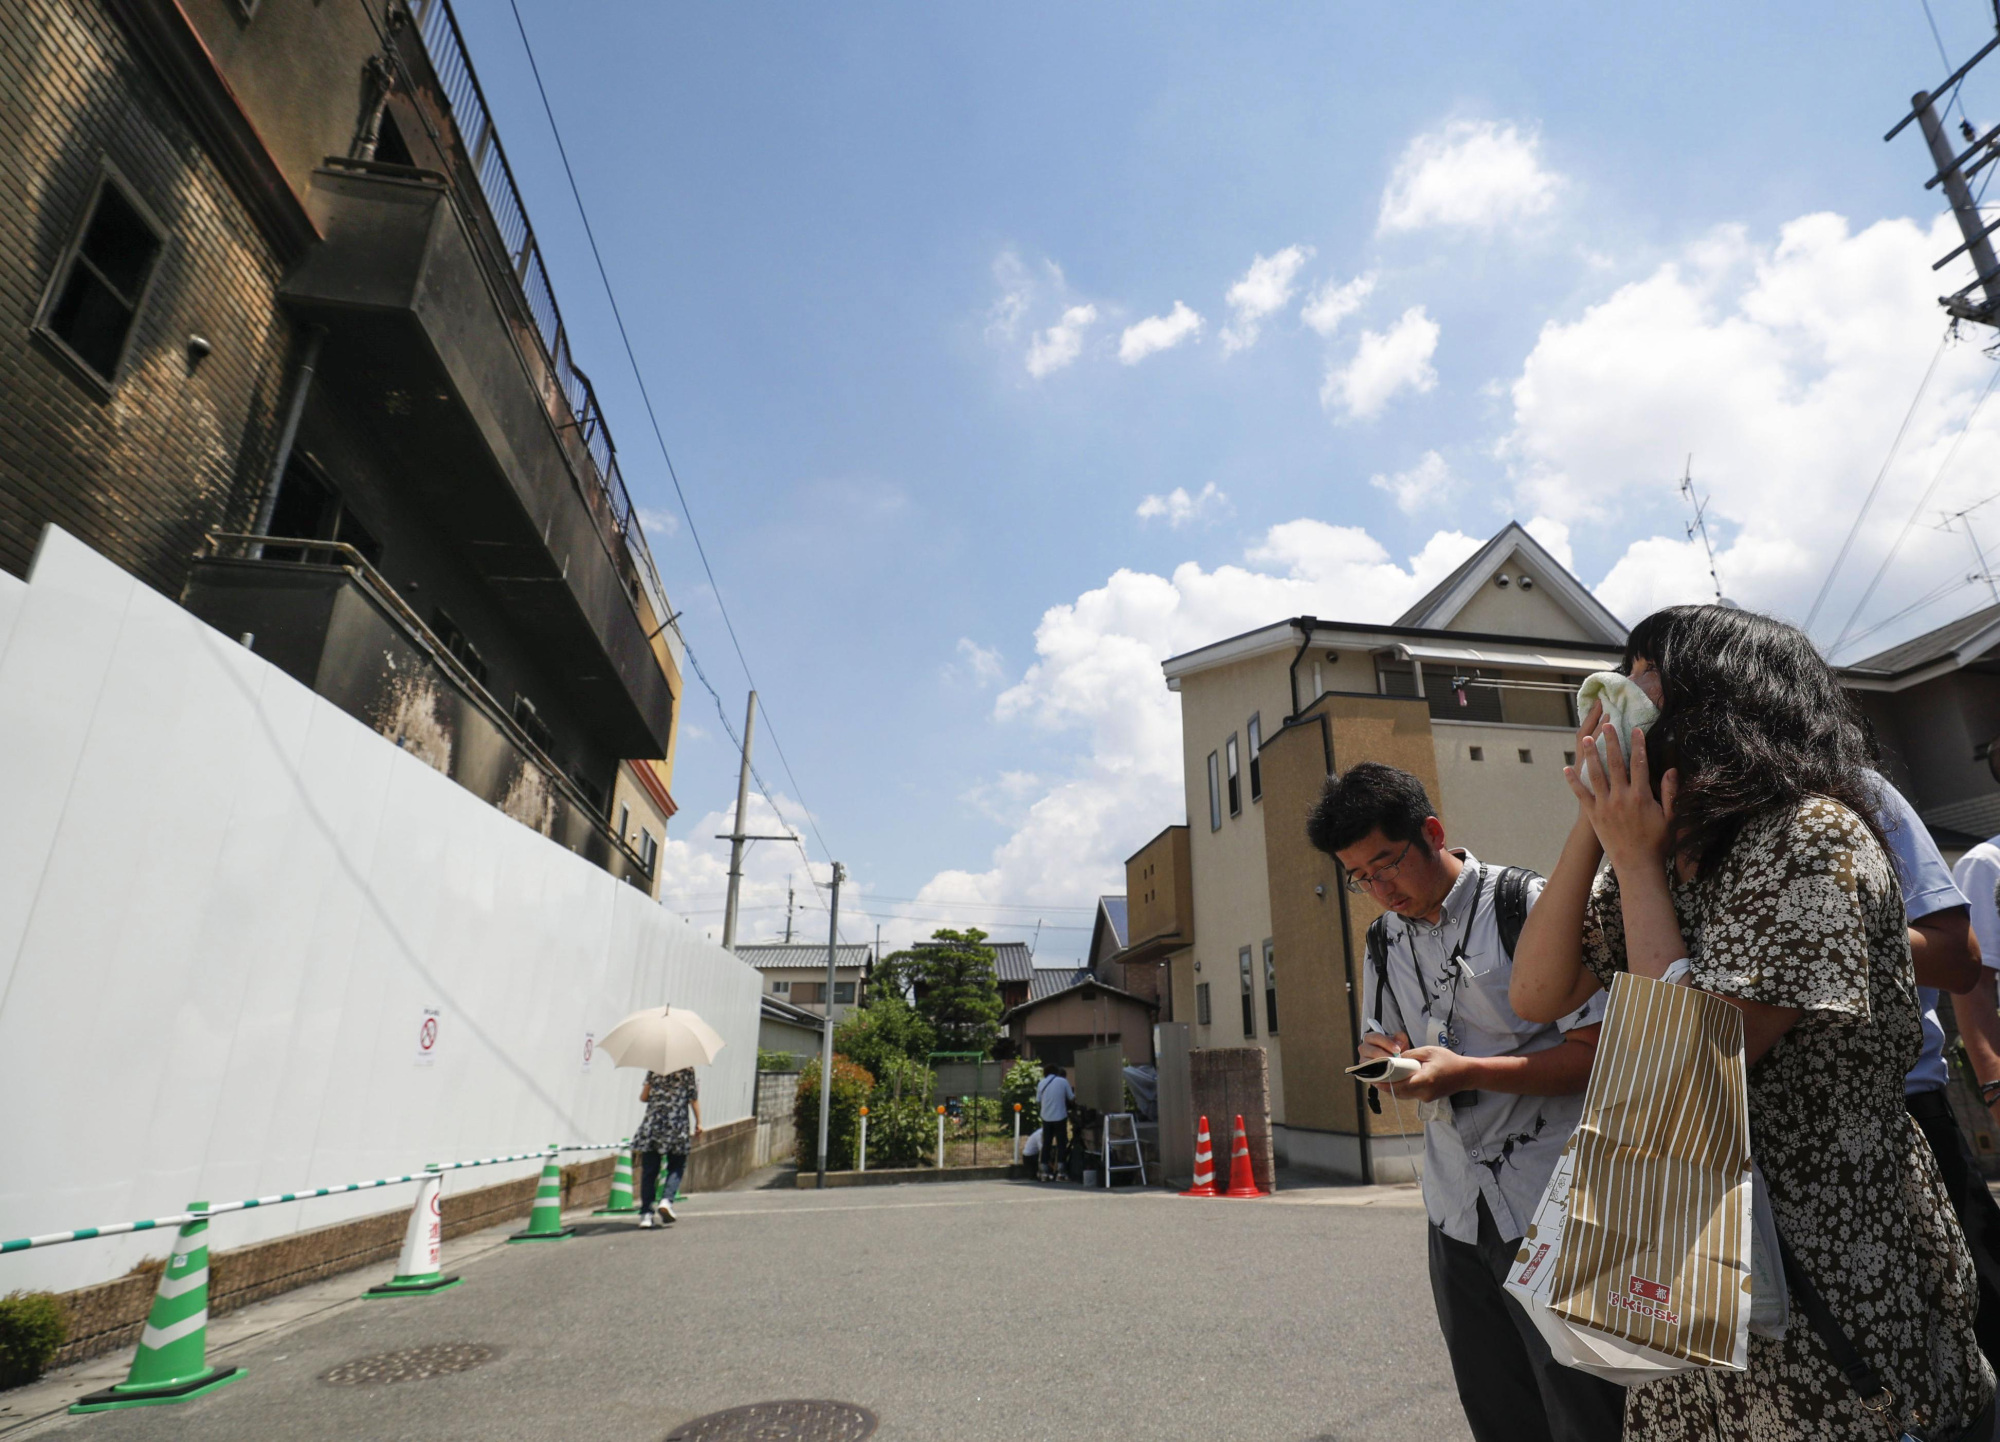 Kyoto Animation massacre puts Japans media at crossroads on disclosure